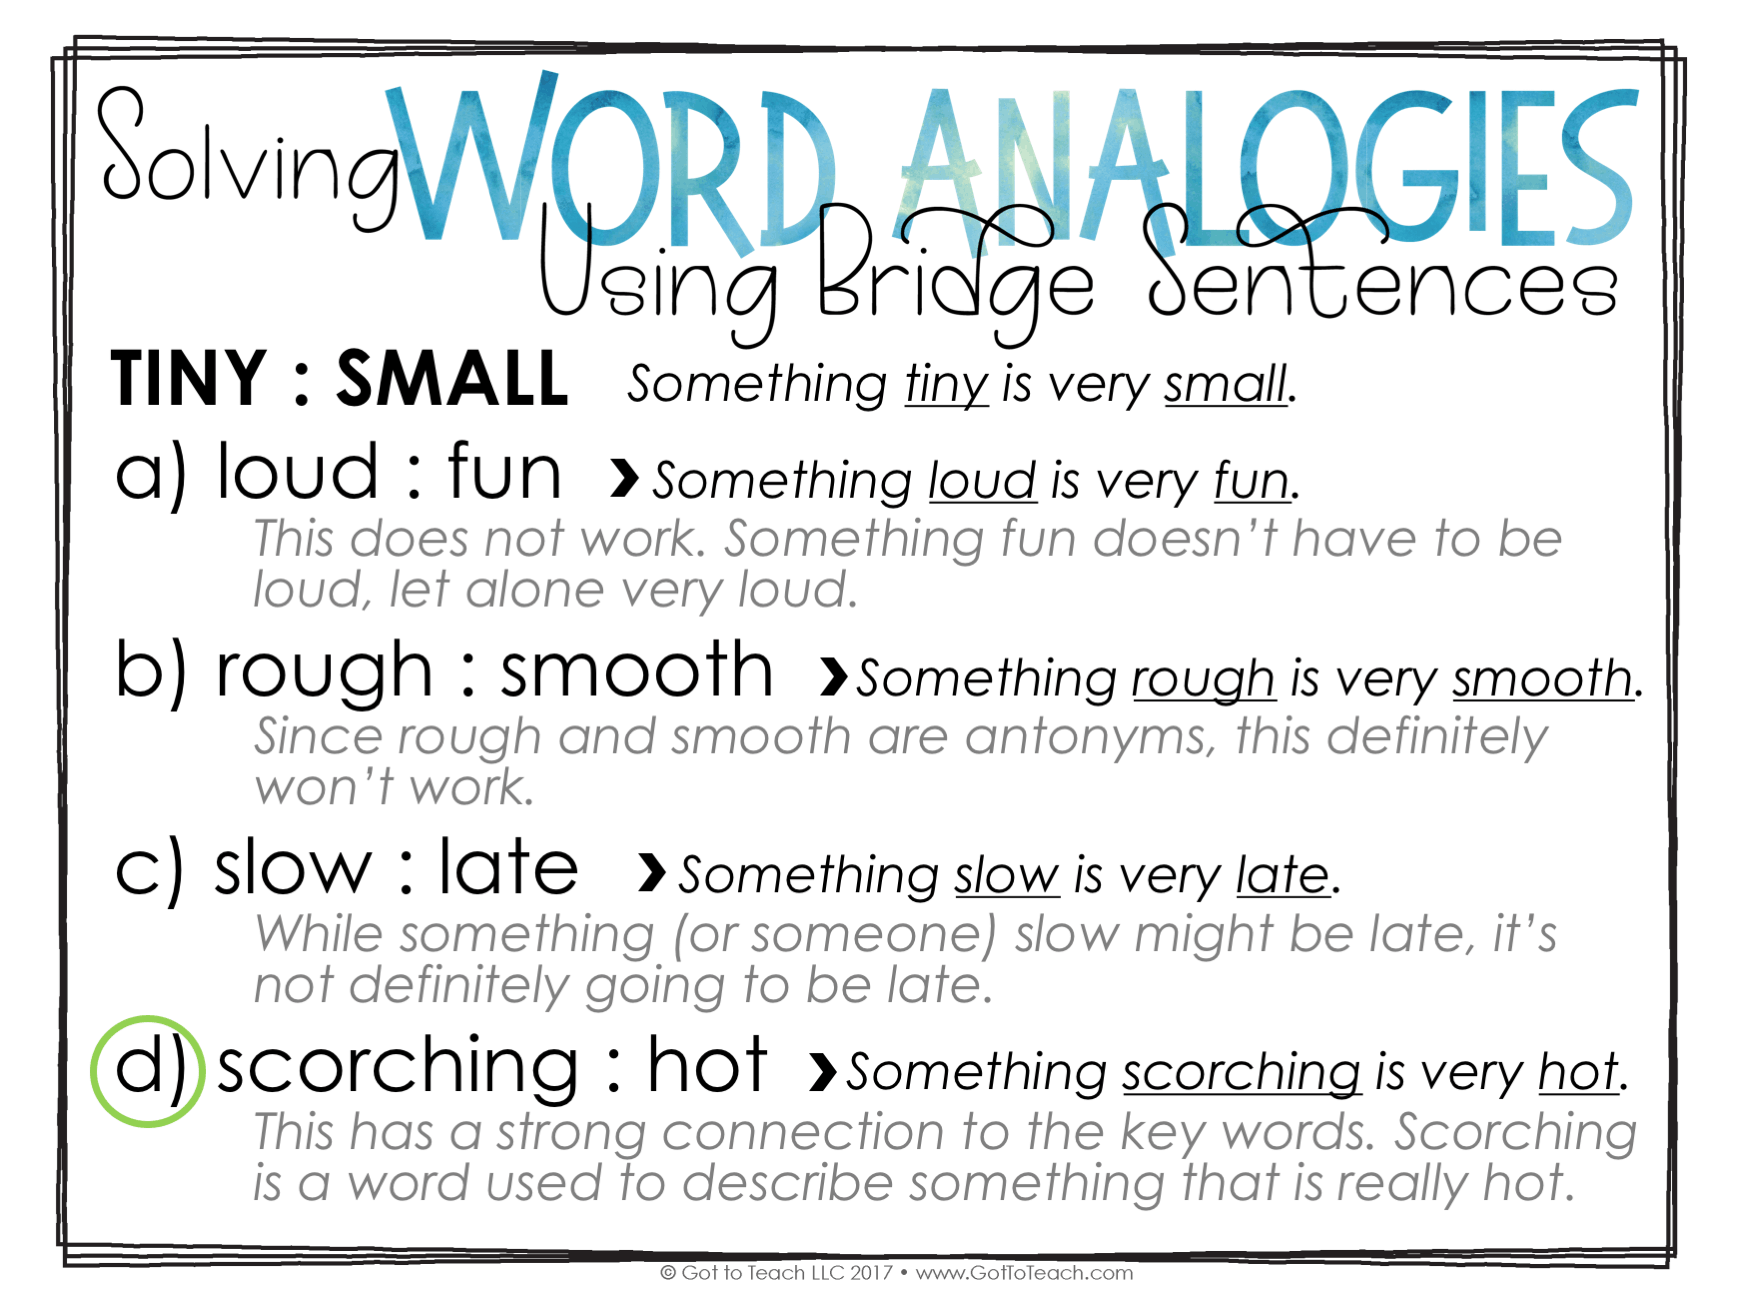 5 Example Of Analogy Sentence